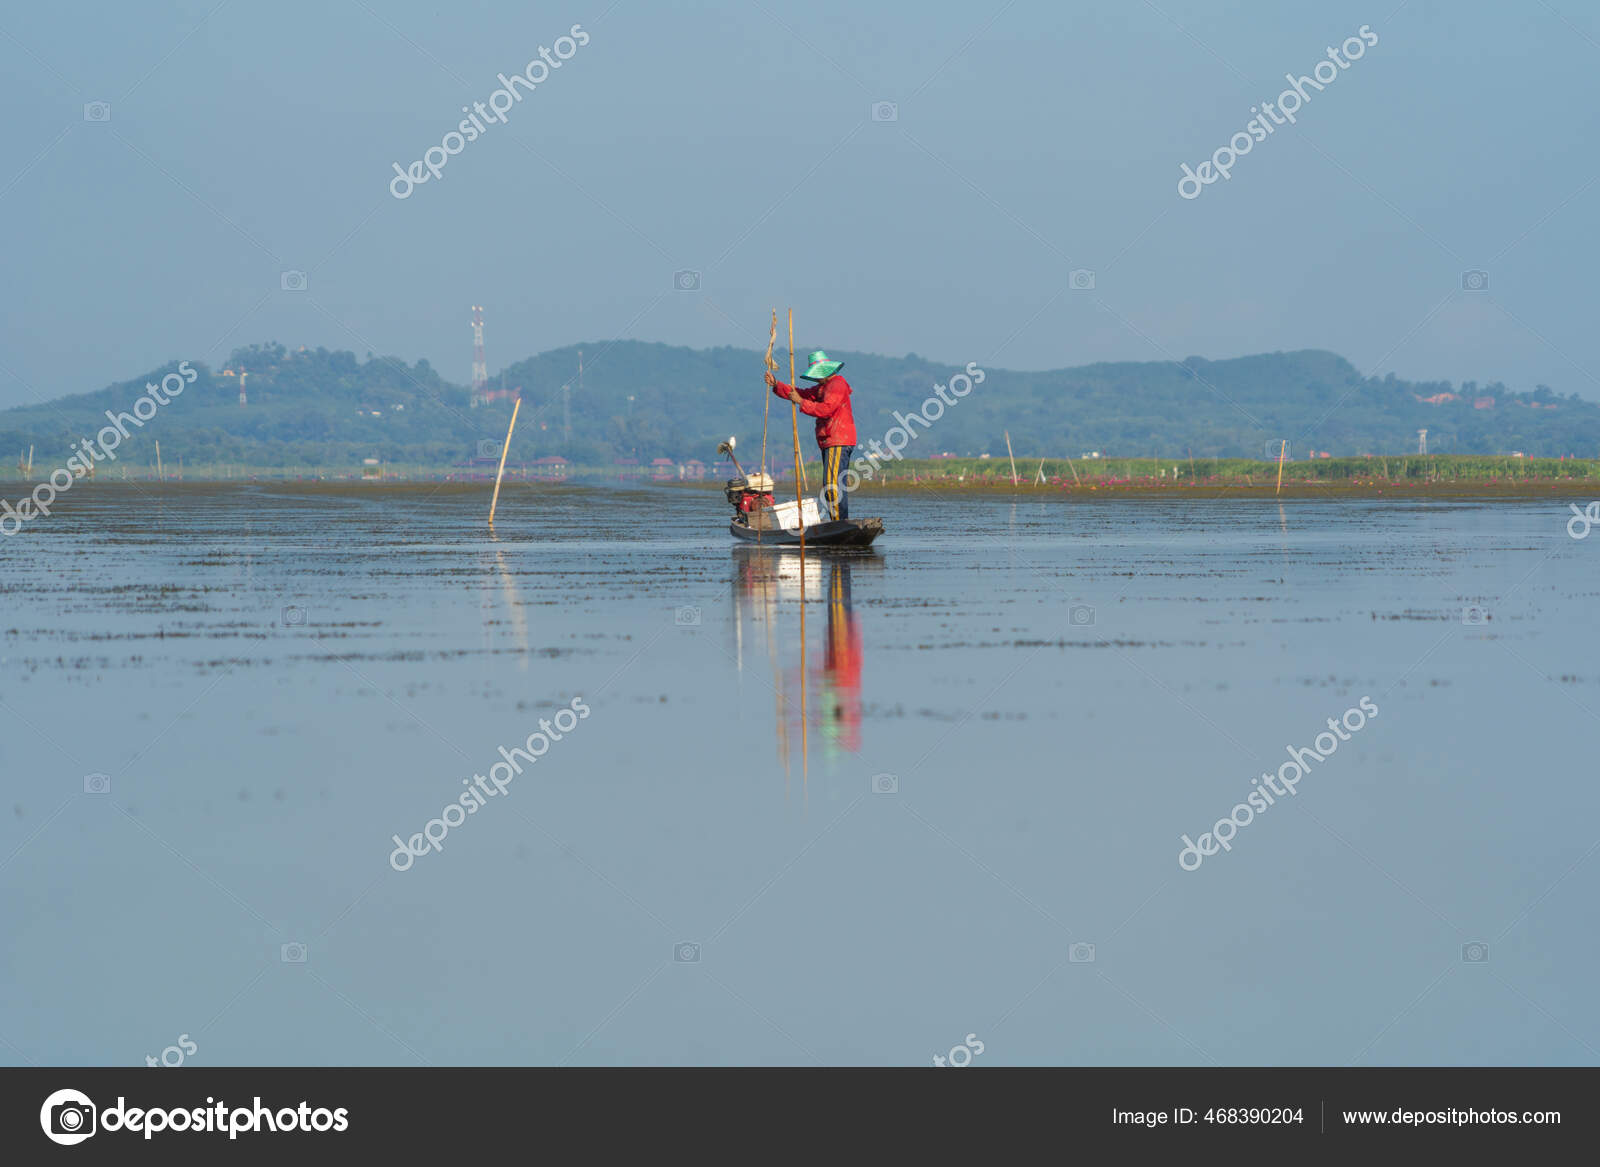 https://st2.depositphotos.com/11351024/46839/i/1600/depositphotos_468390204-stock-photo-fisherman-casting-throwing-net-catching.jpg